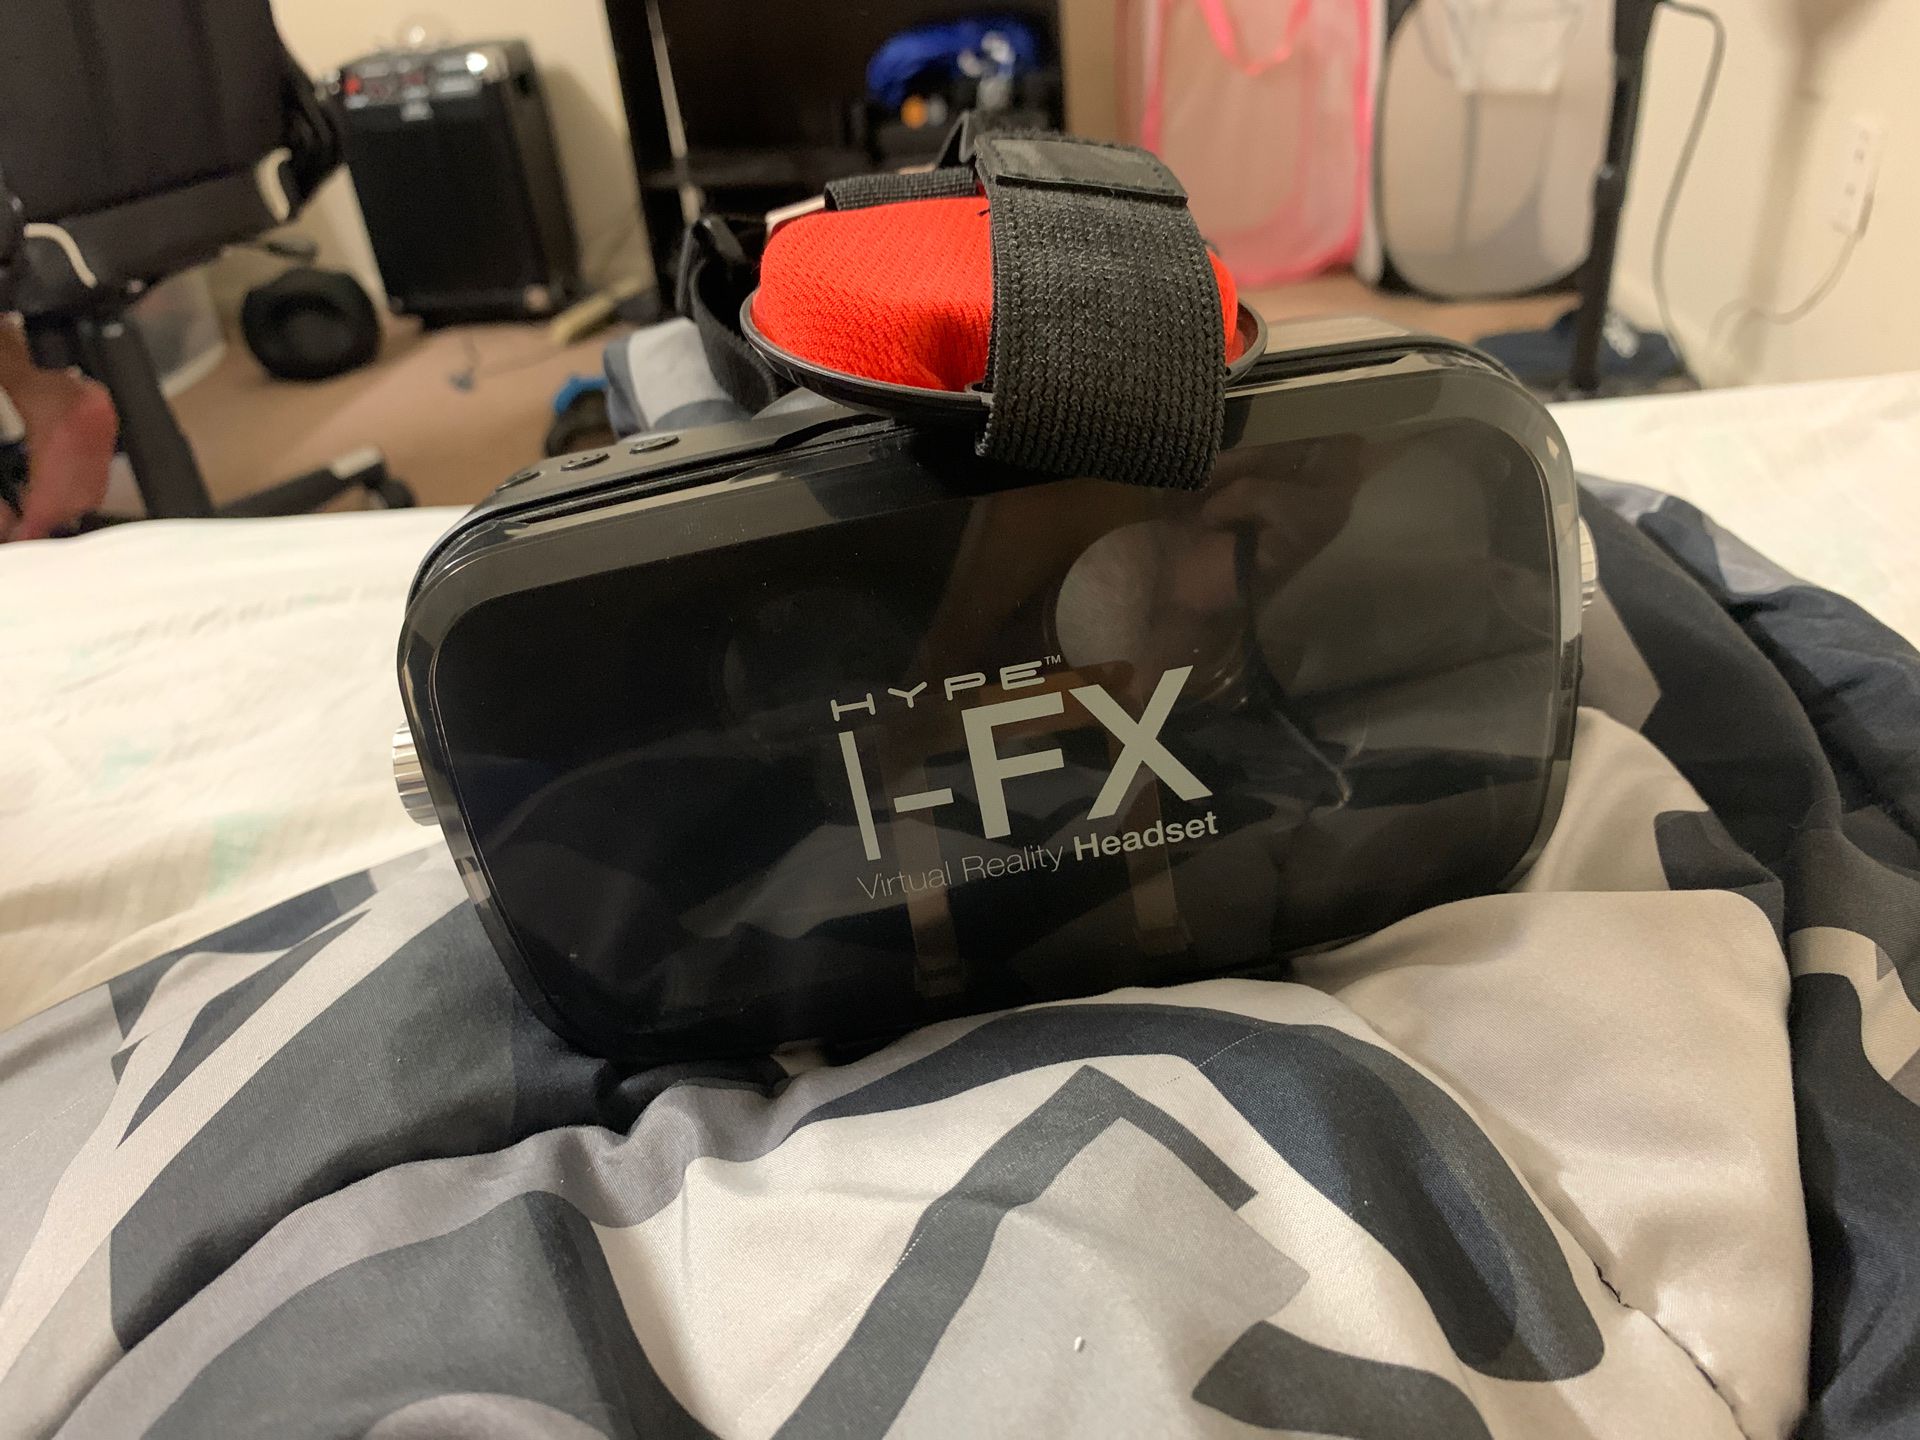 HYPE I-FX Virtual Reality Headset